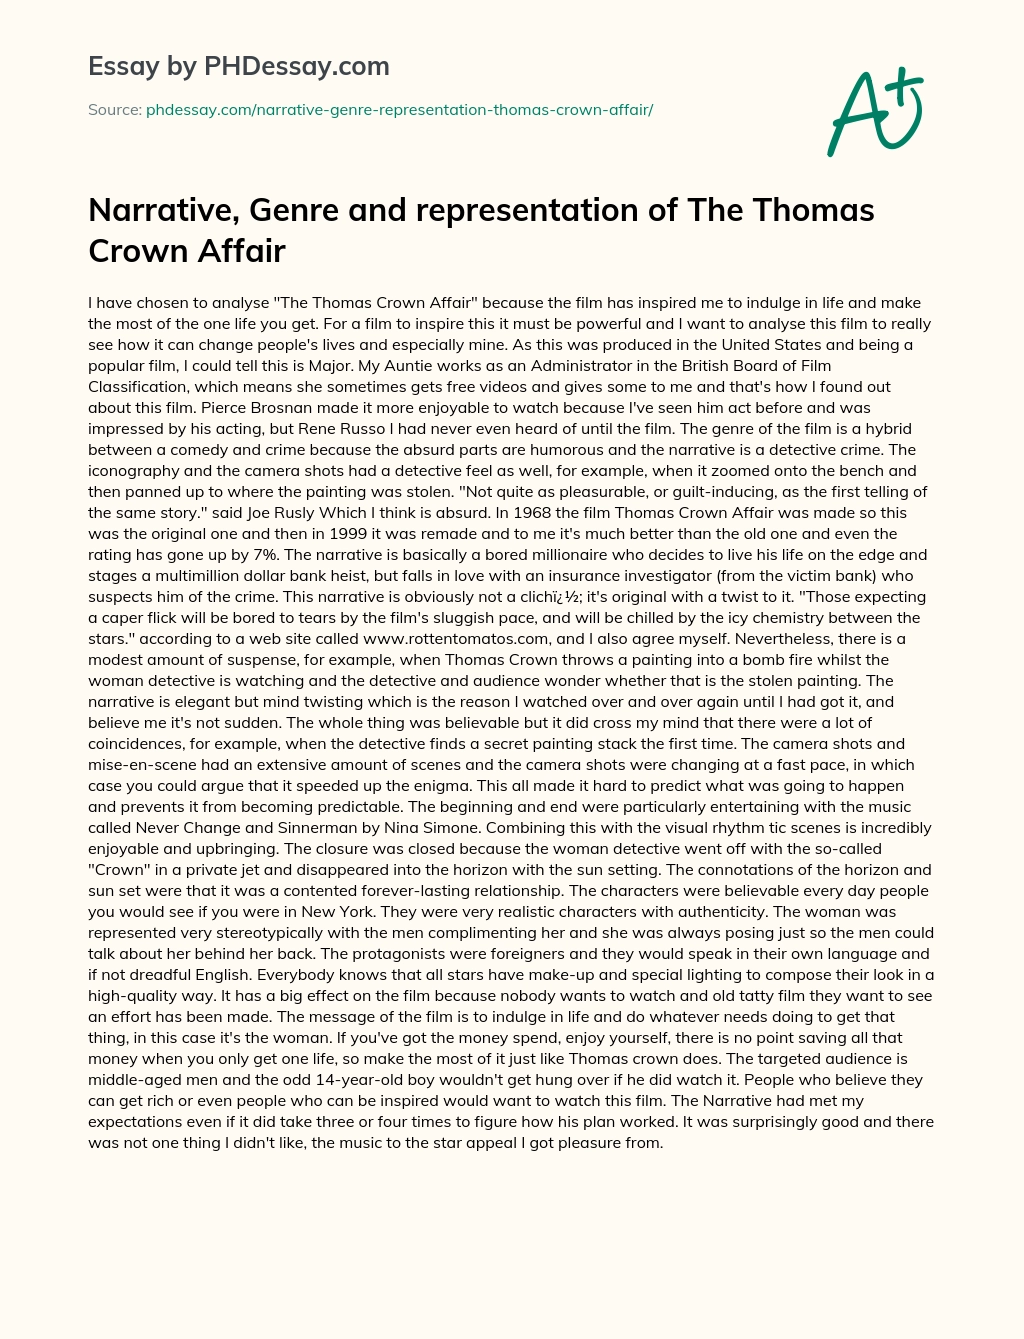 Narrative, Genre and representation of The Thomas Crown Affair essay